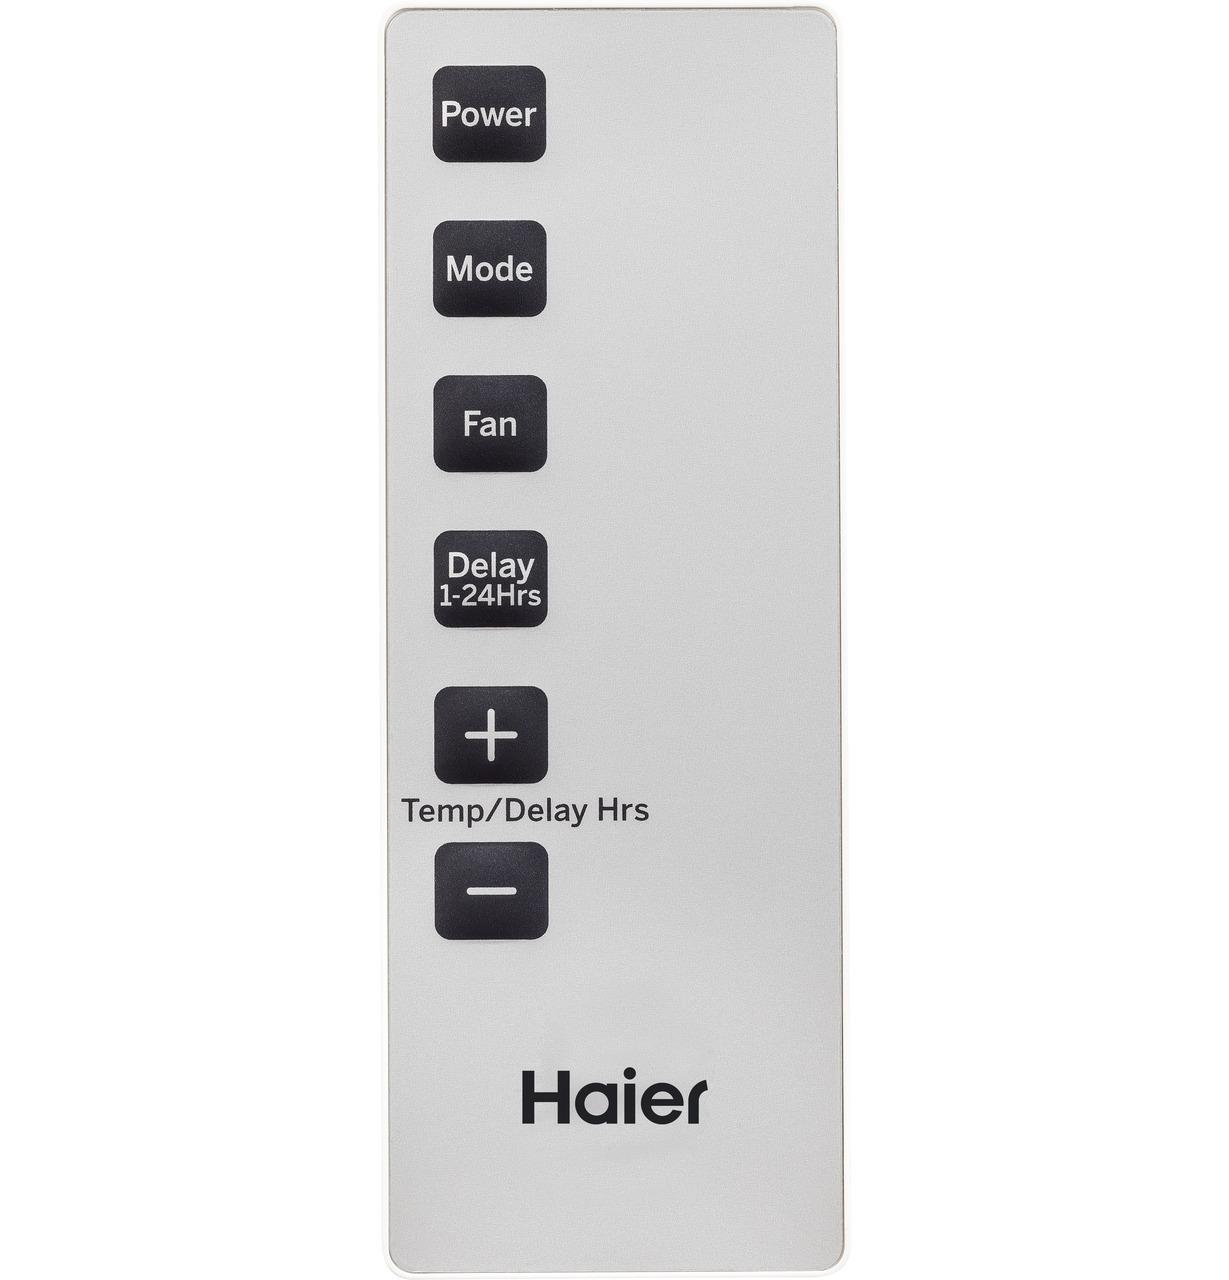 Haier ENERGY STAR® 23,500/22,900 BTU 230/208 Volt Smart Electronic Window Air Conditioner